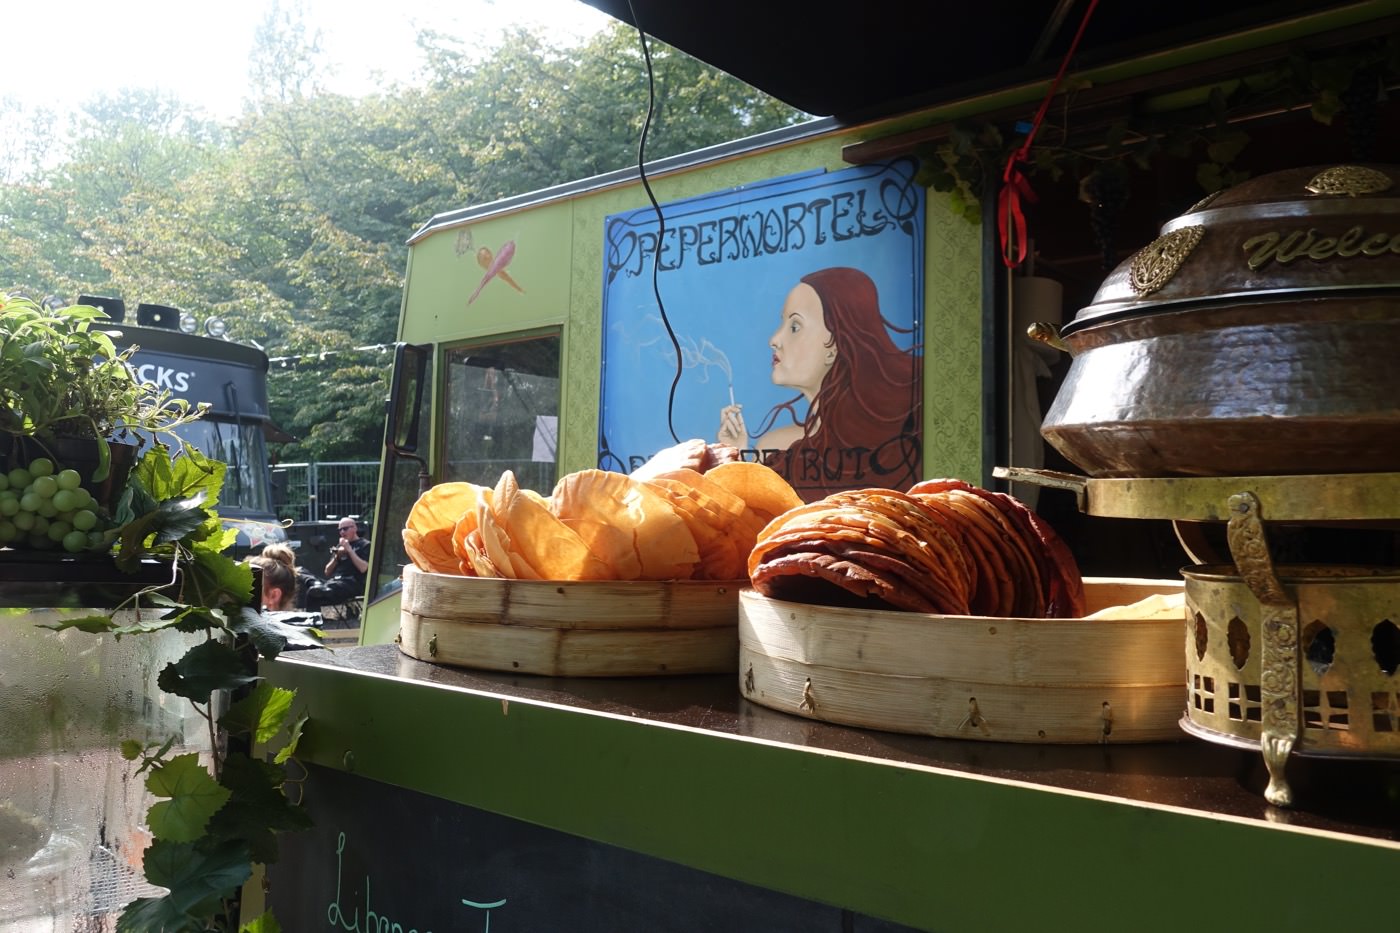 阿姆斯特丹活動 Kookt Music & Food Festival @ Oosterpark 美食與音樂祭 - 一口冒險 Bitesized Adventure